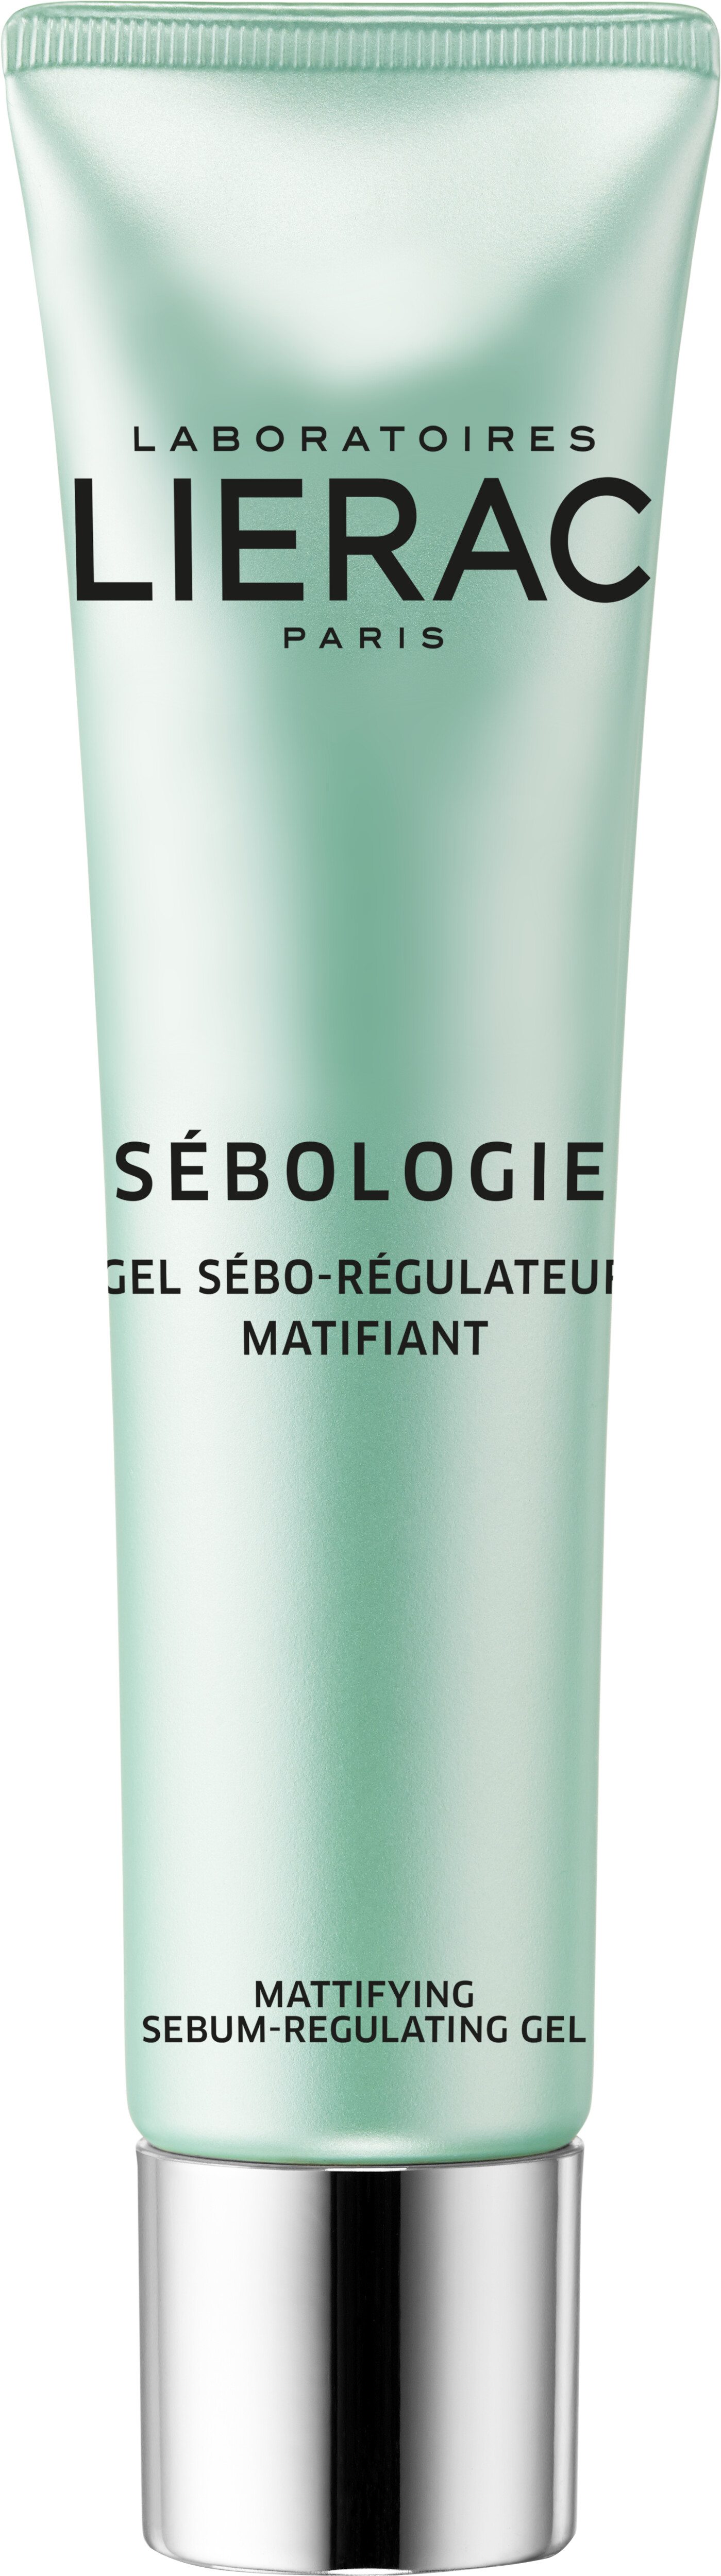 Lierac Sebologie Mattifying Sebum-Regulating Gel 40ml